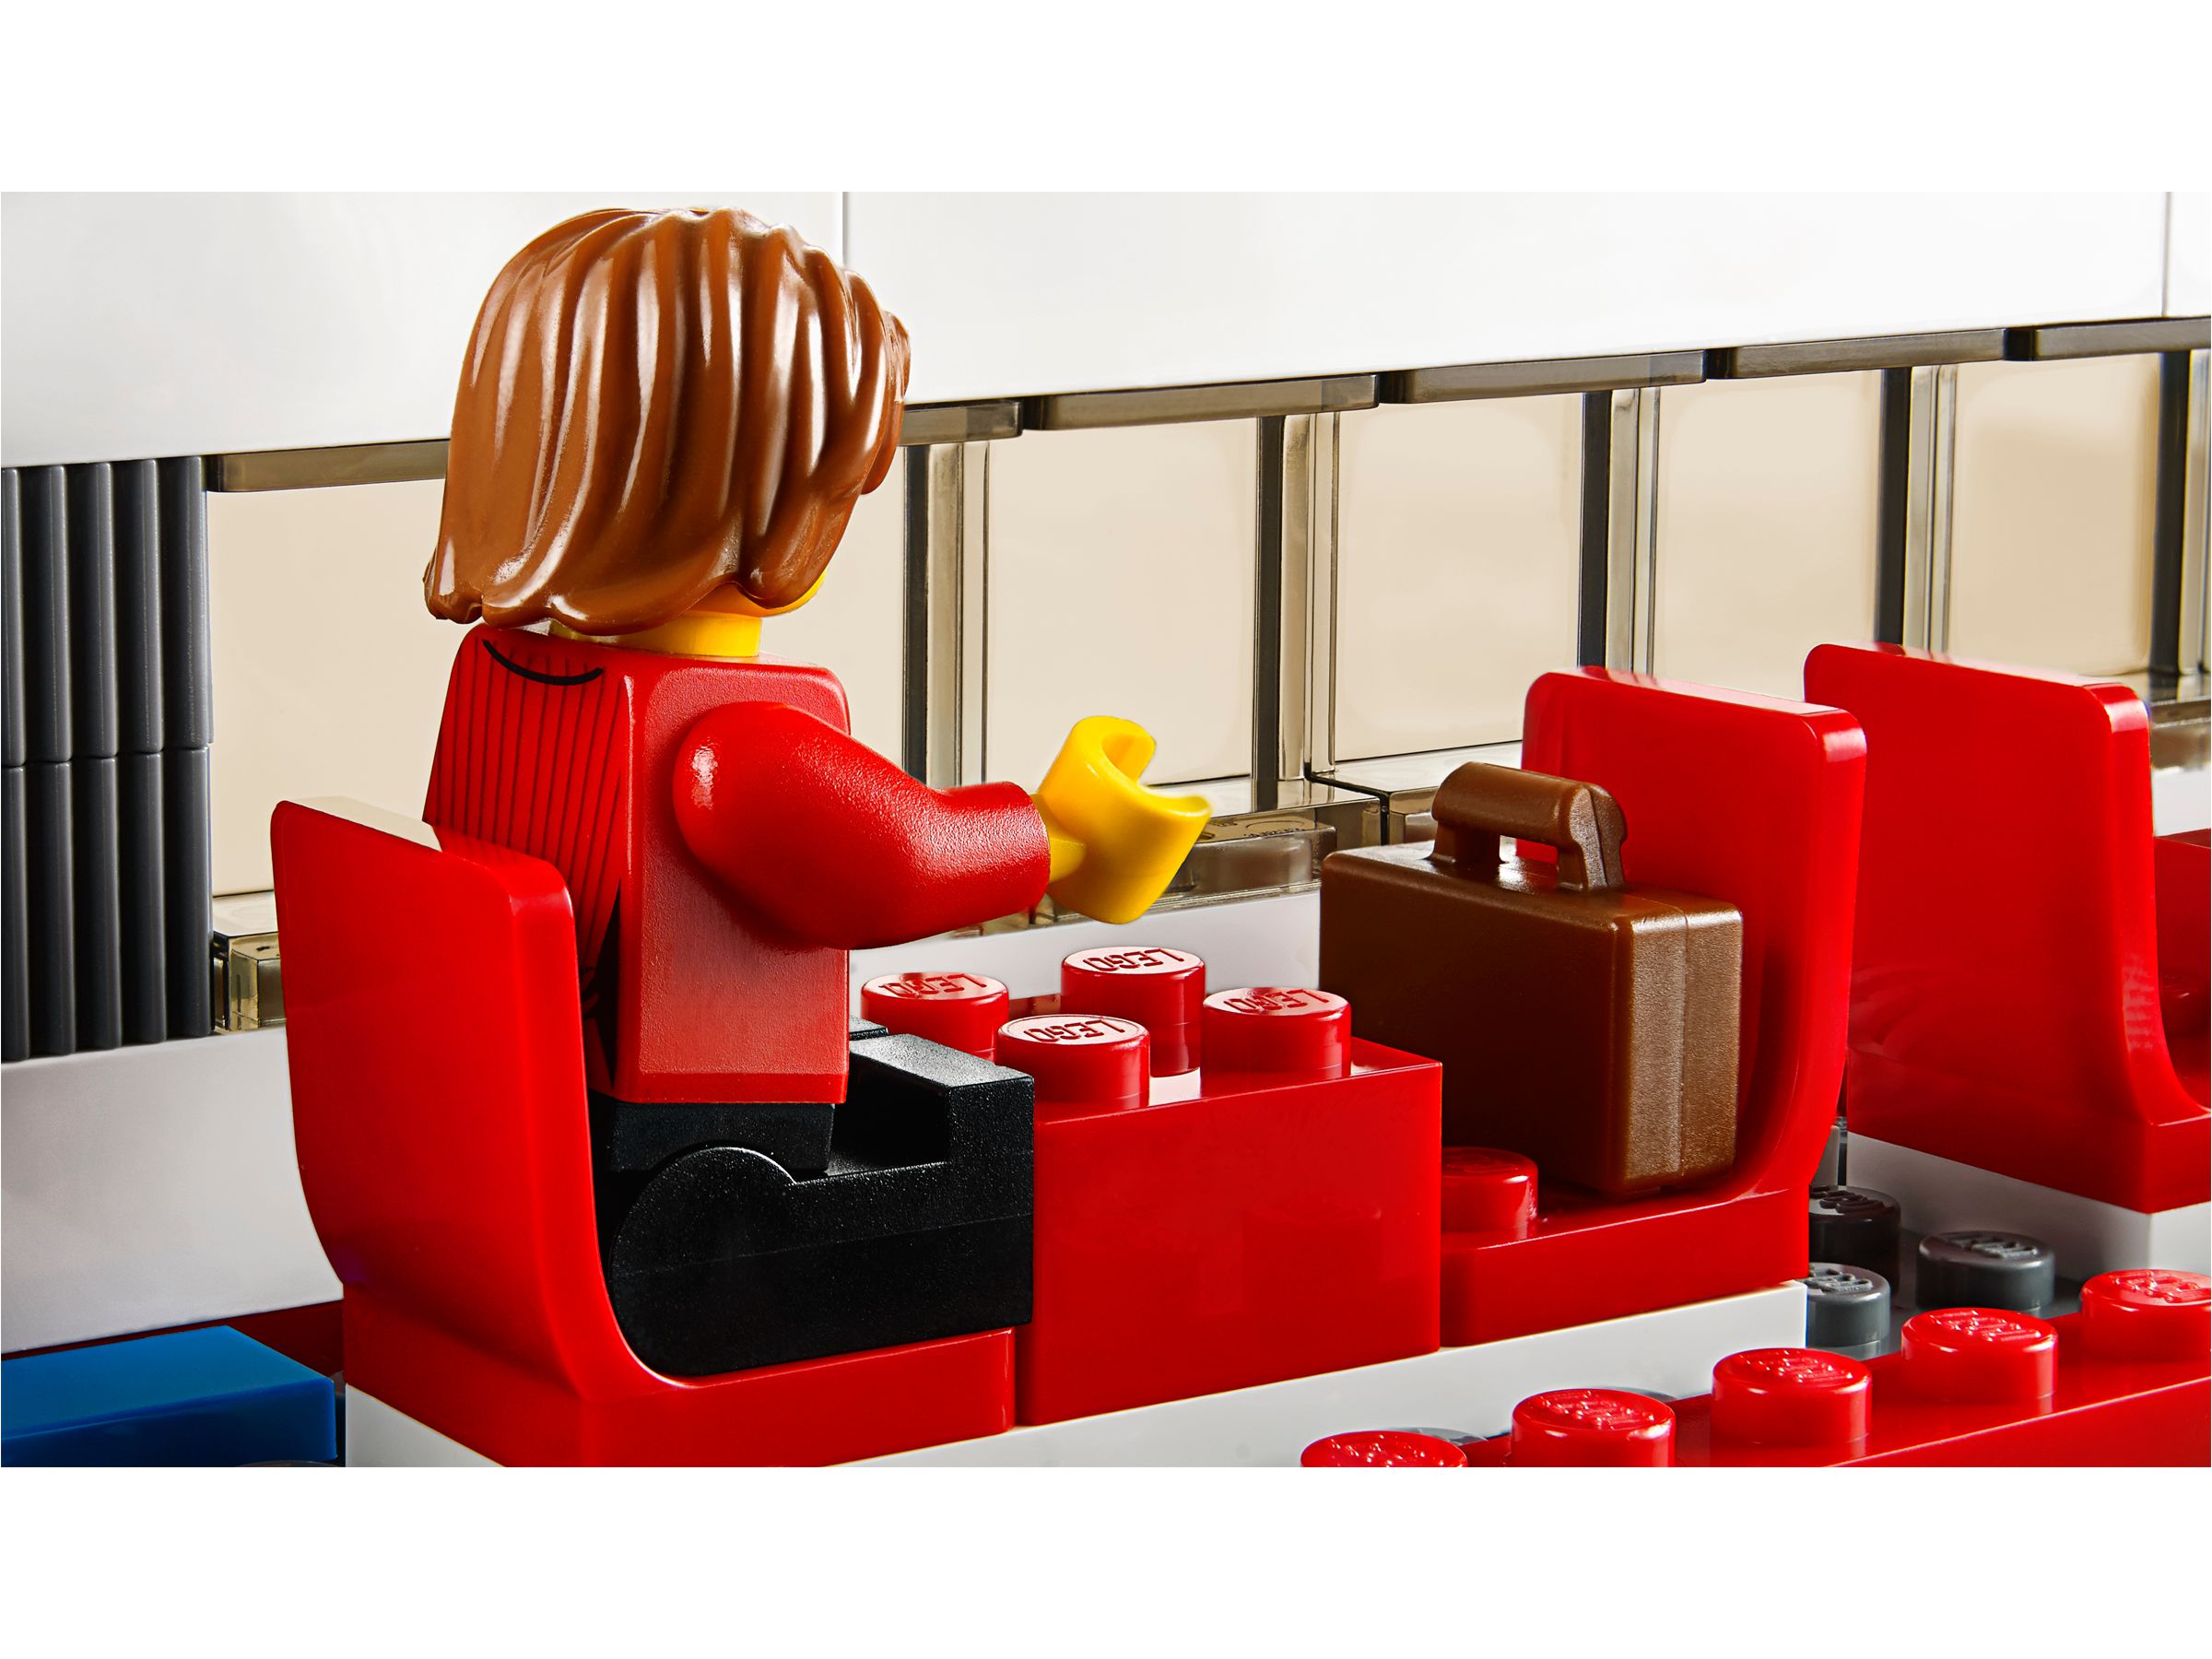 LEGO City 60051 Hochgeschwindigkeitszug LEGO_60051_alt8.jpg